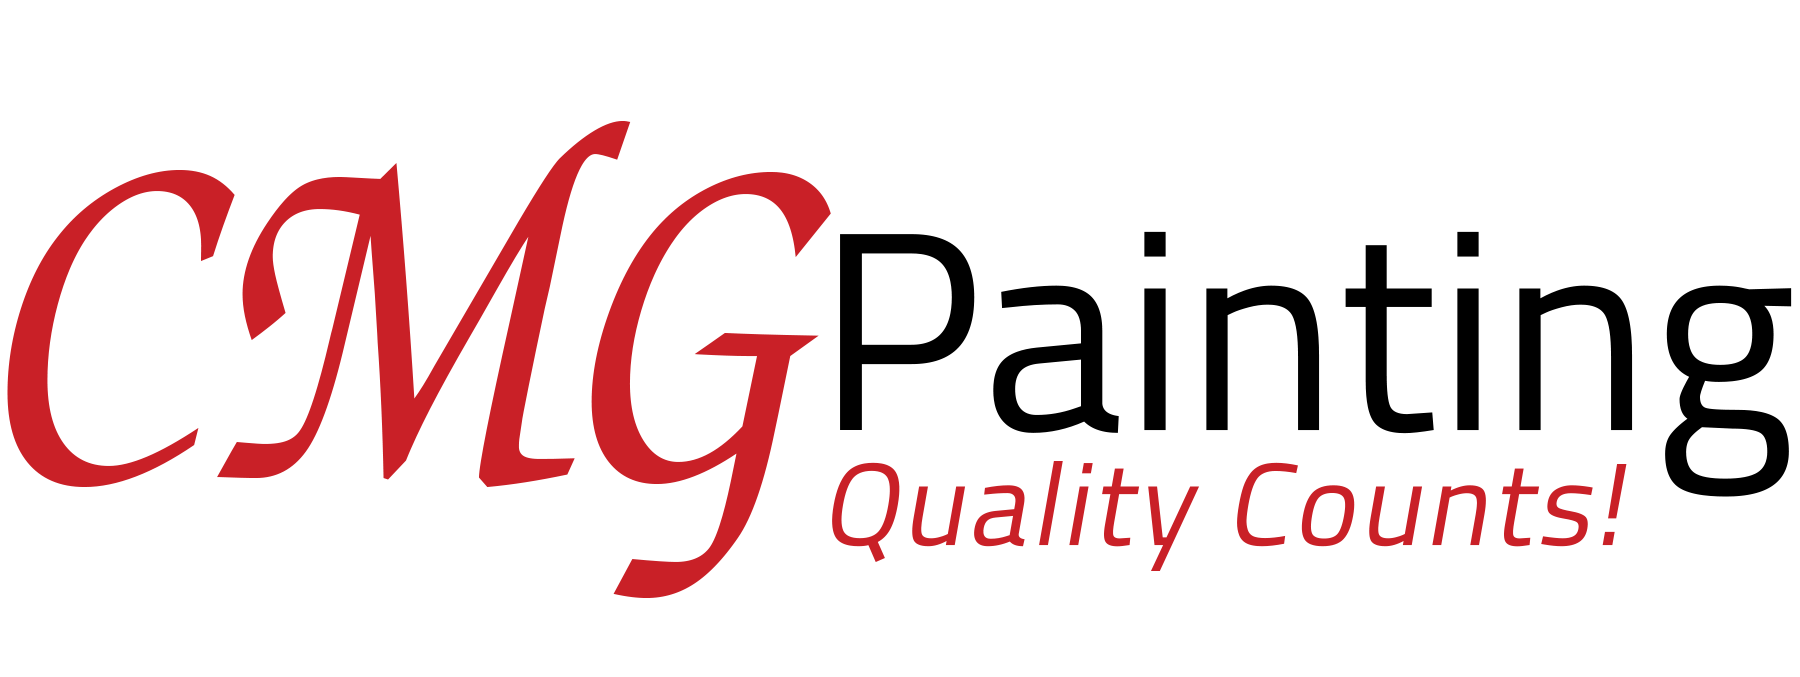 CMG Painting Logo Working